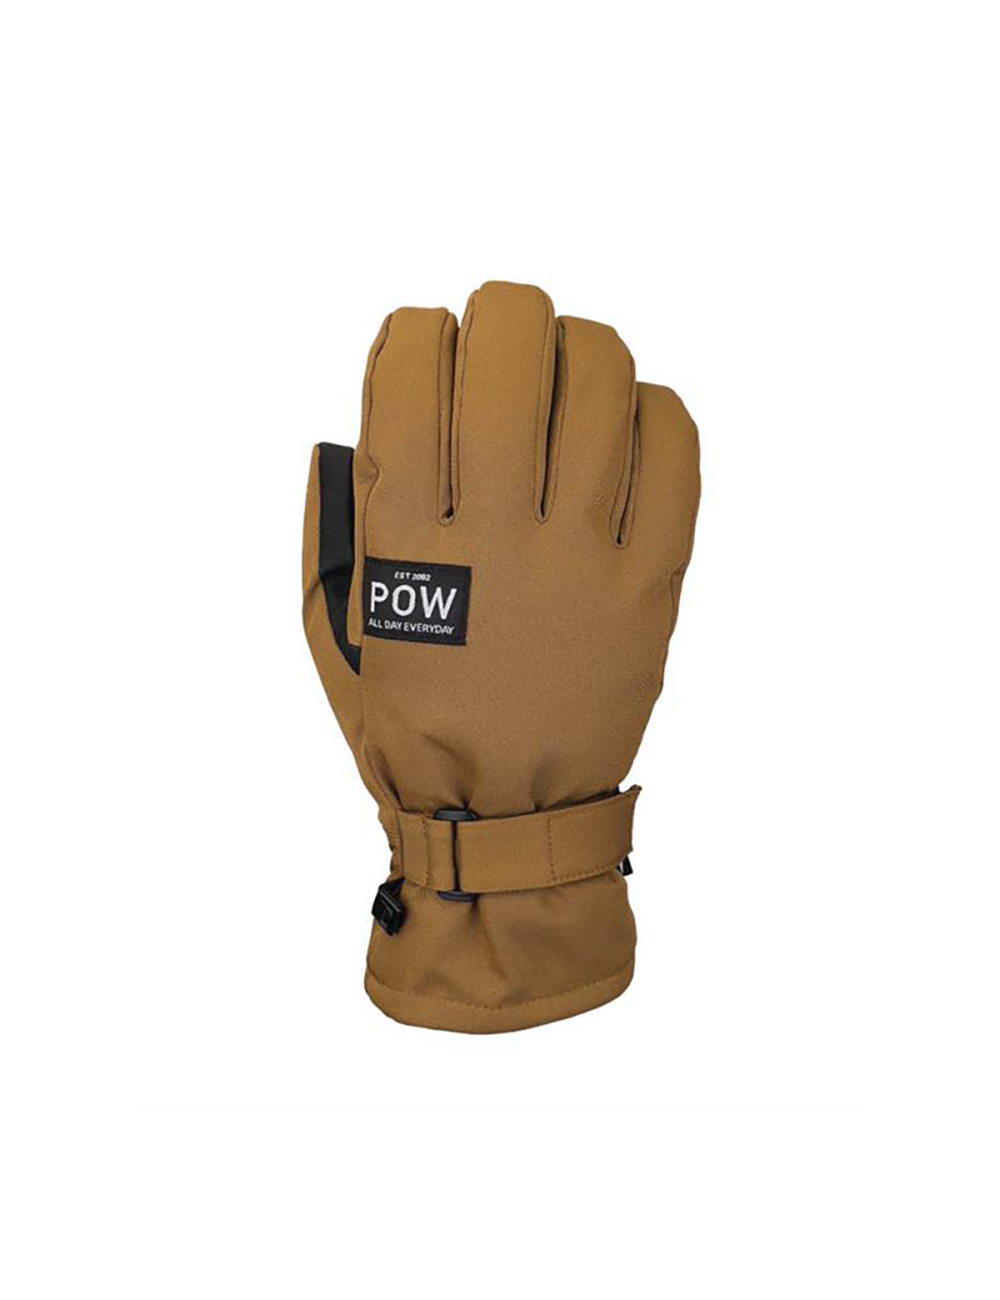 POW XG MID Glove - Rubber